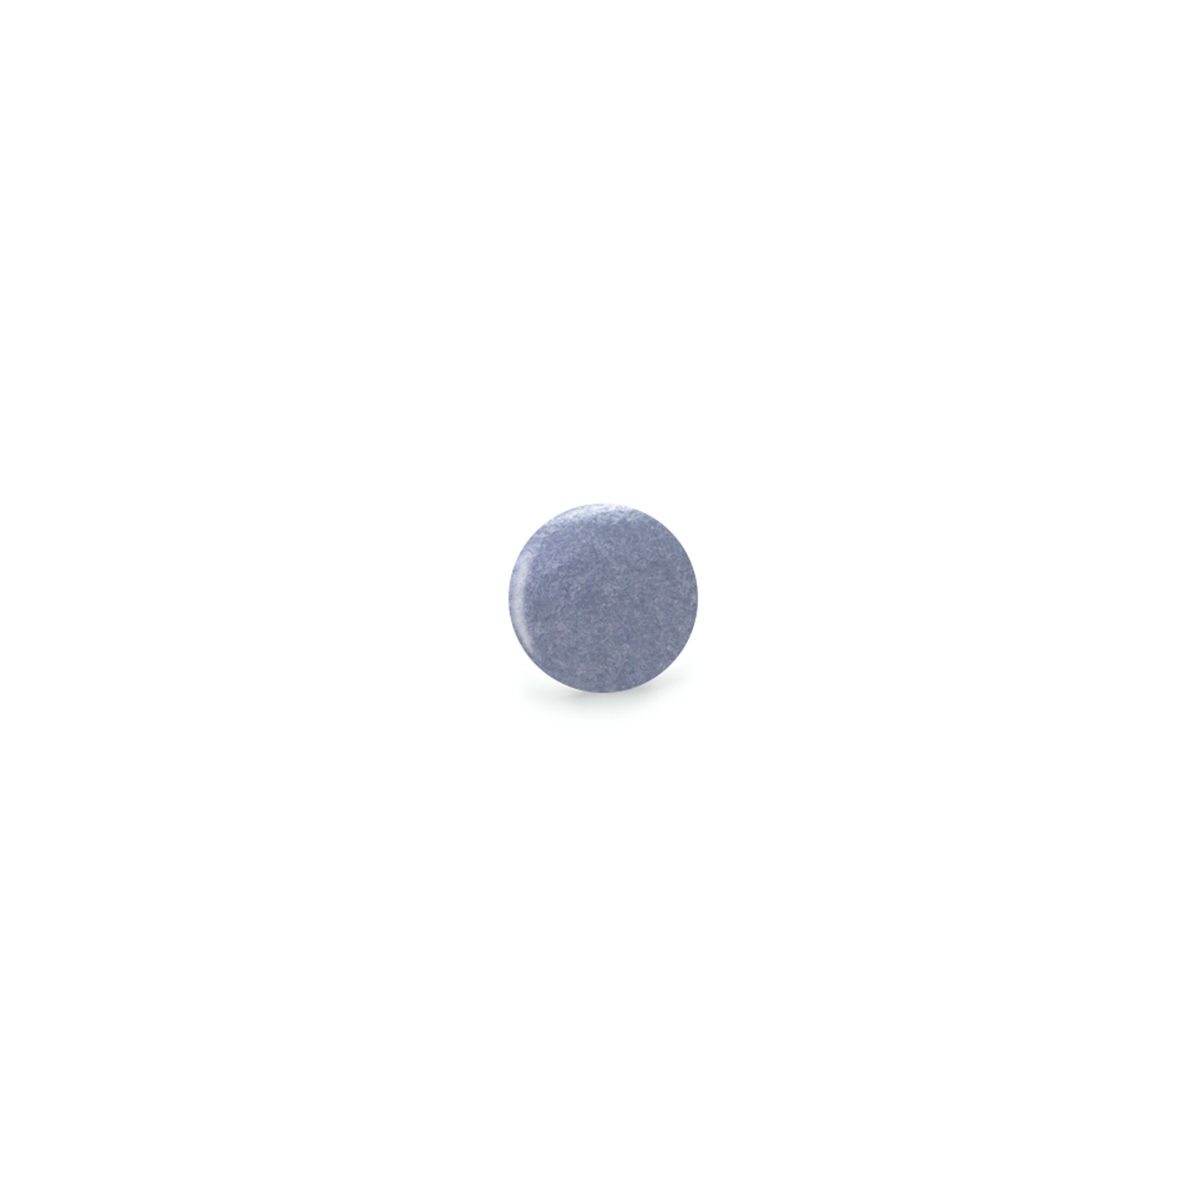 Lentilles luxe - Bleu gris